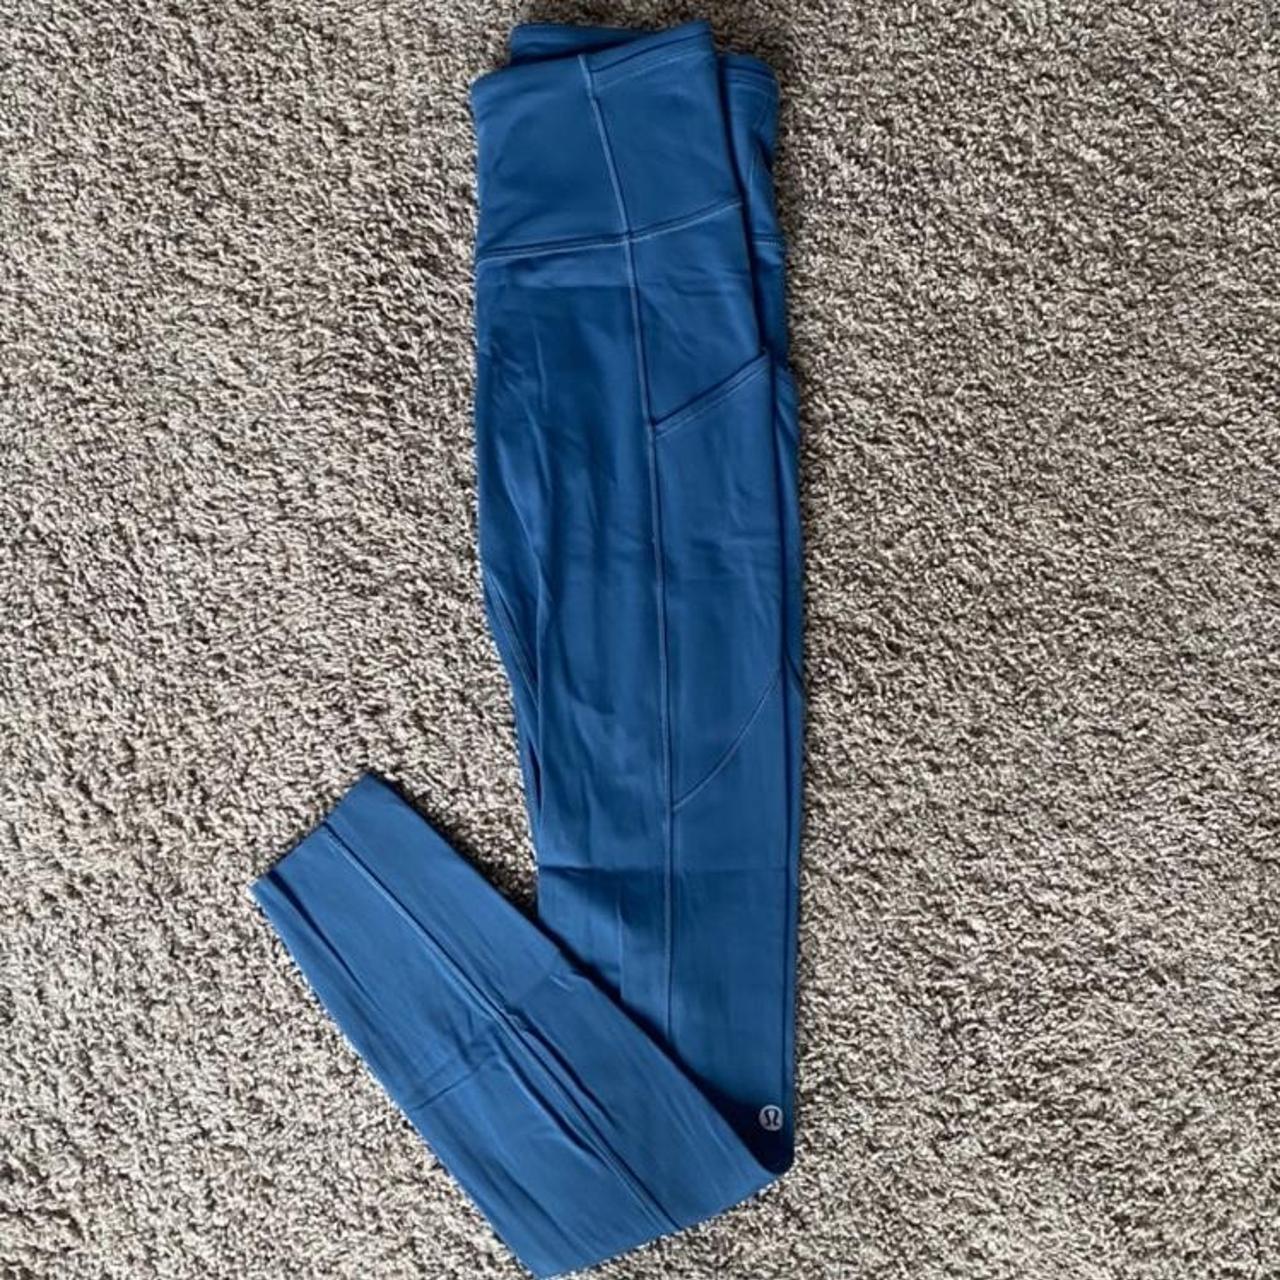 Lululemon blue leggings size 4 - Depop